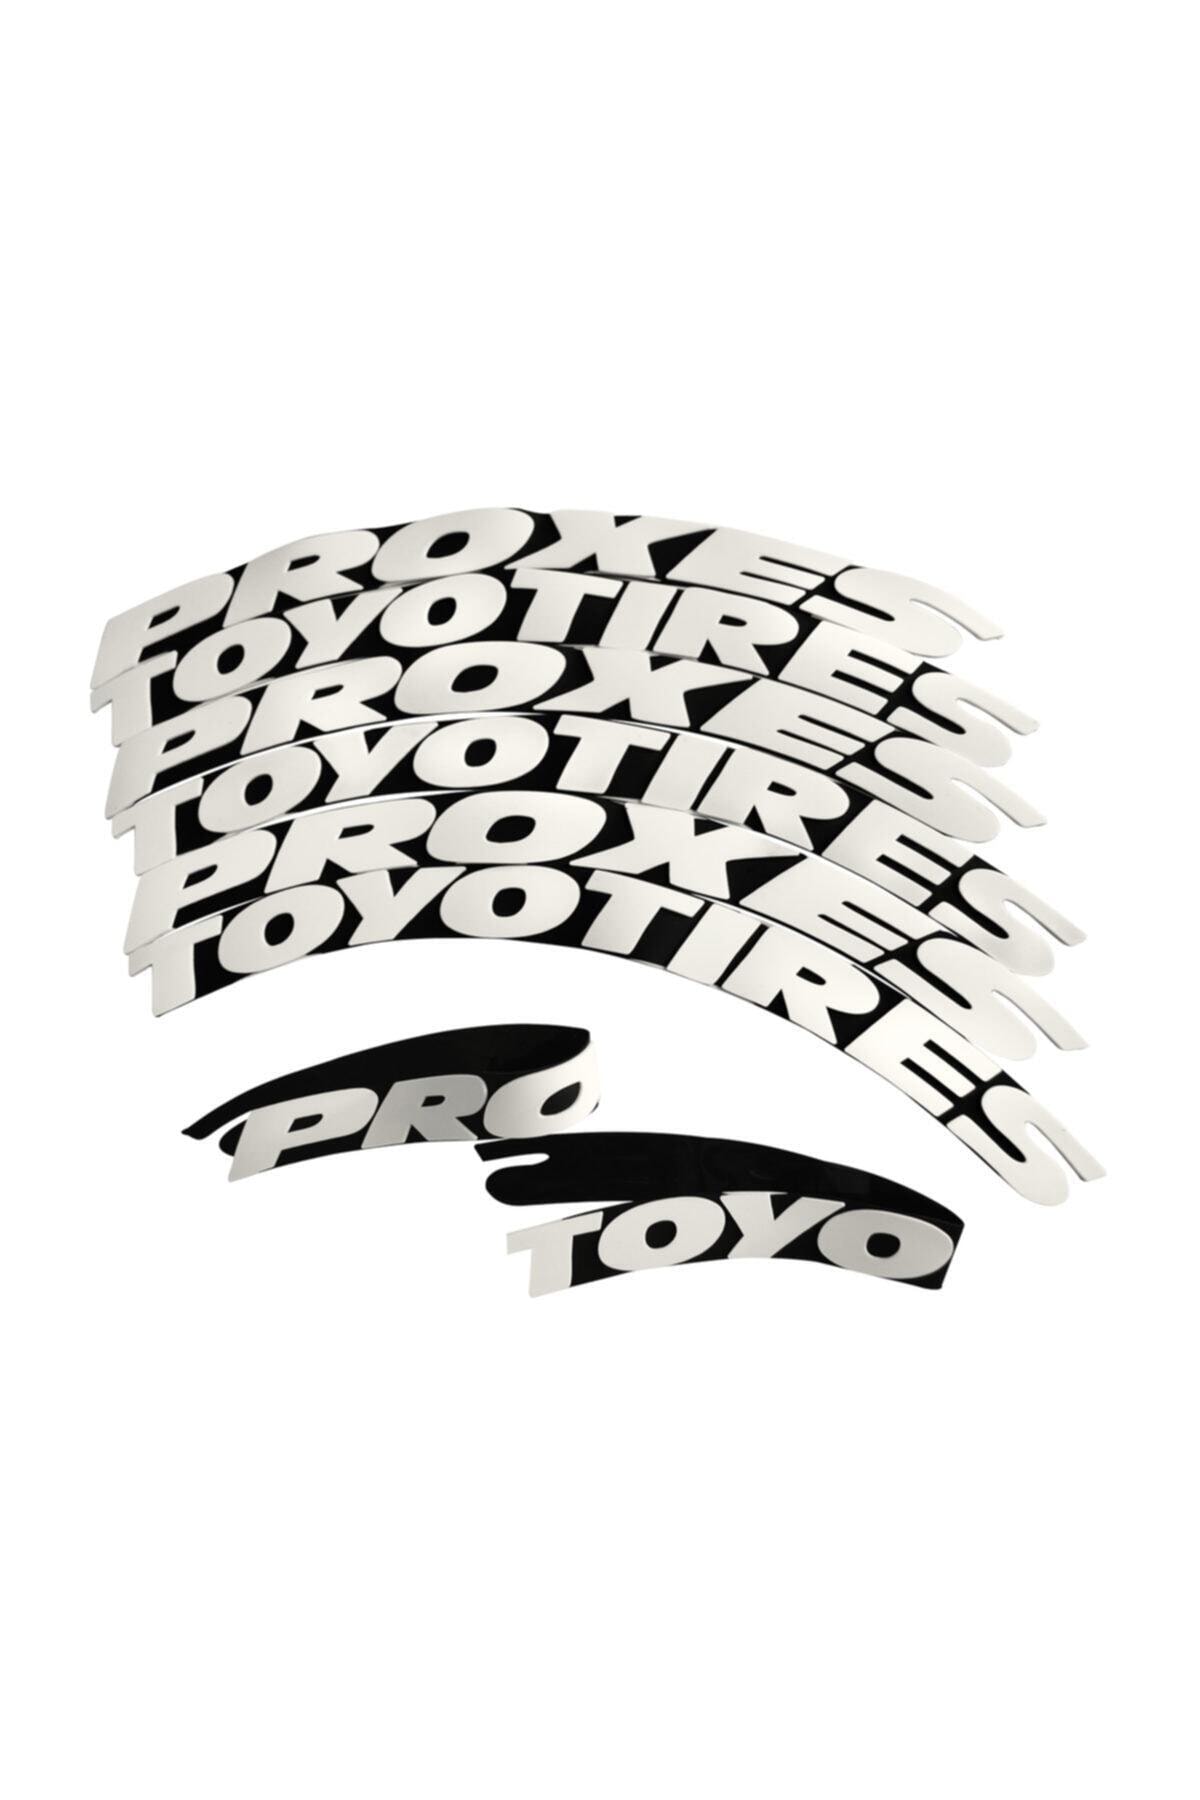 komauto Yeni Ürün Orjinal Toyo Tires Proxes 3d Lastik Yazısı Garantili 4 Adet